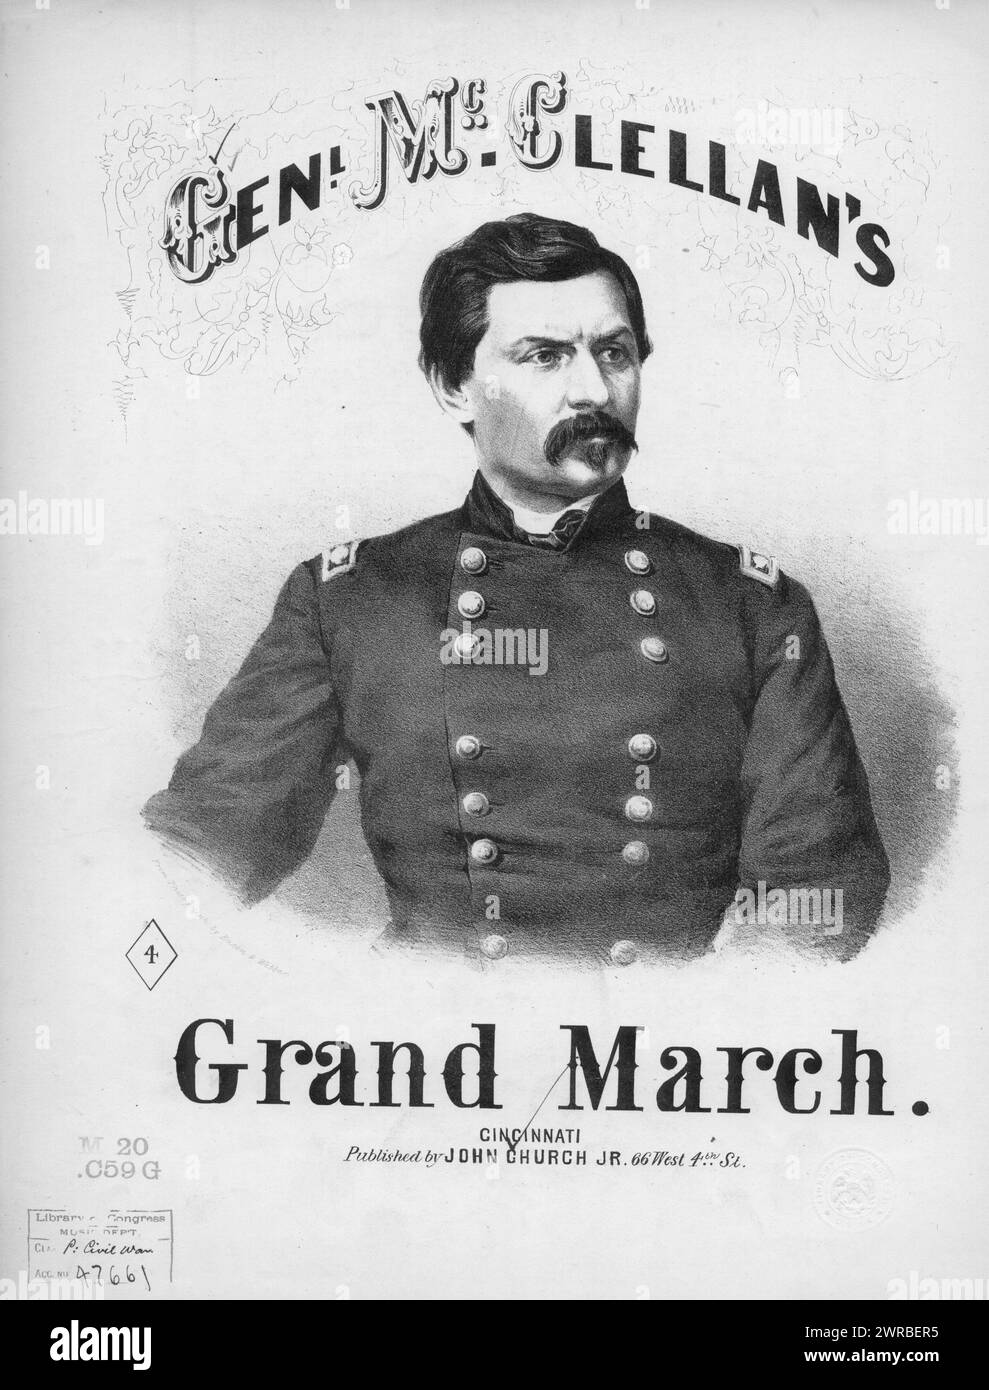 Genl. McClellan's grand march, John Church Jr., Cincinnati, 1864., United States, History, Civil War, 1861-1865, Songs and music Stock Photo